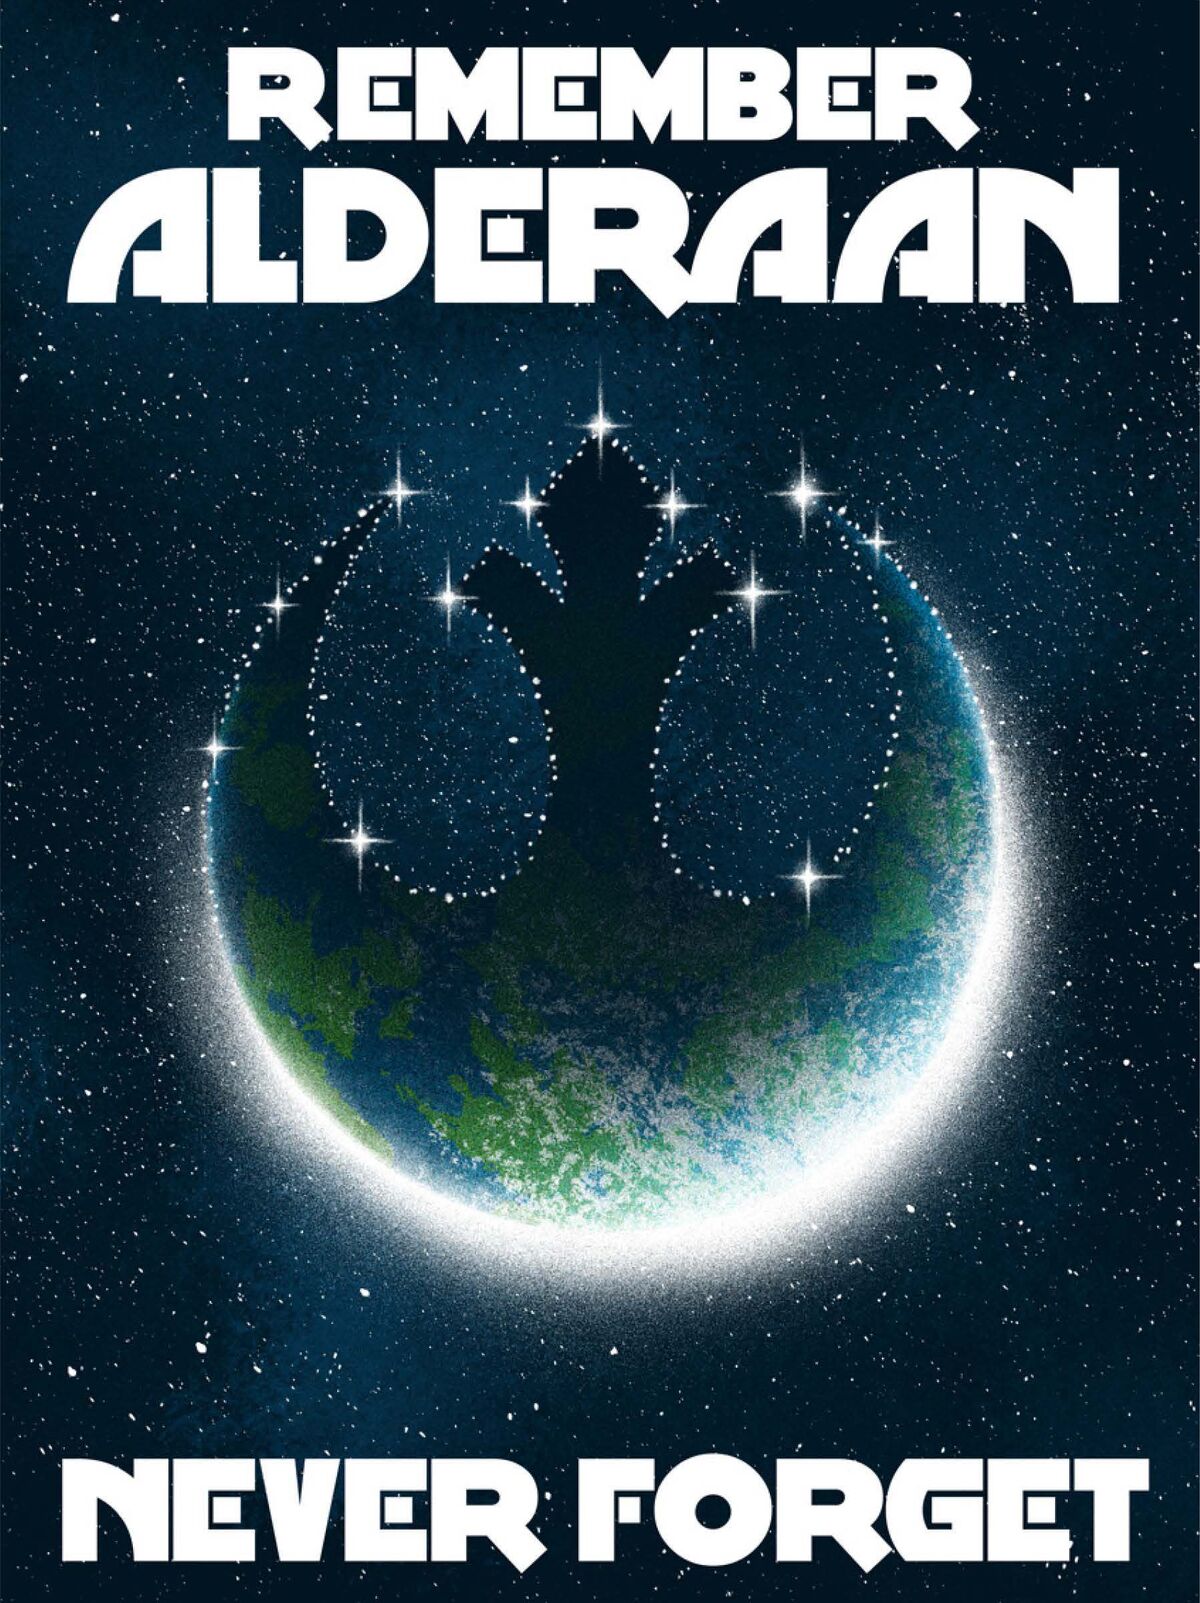 Star Wars propaganda poster Remember Alderaan